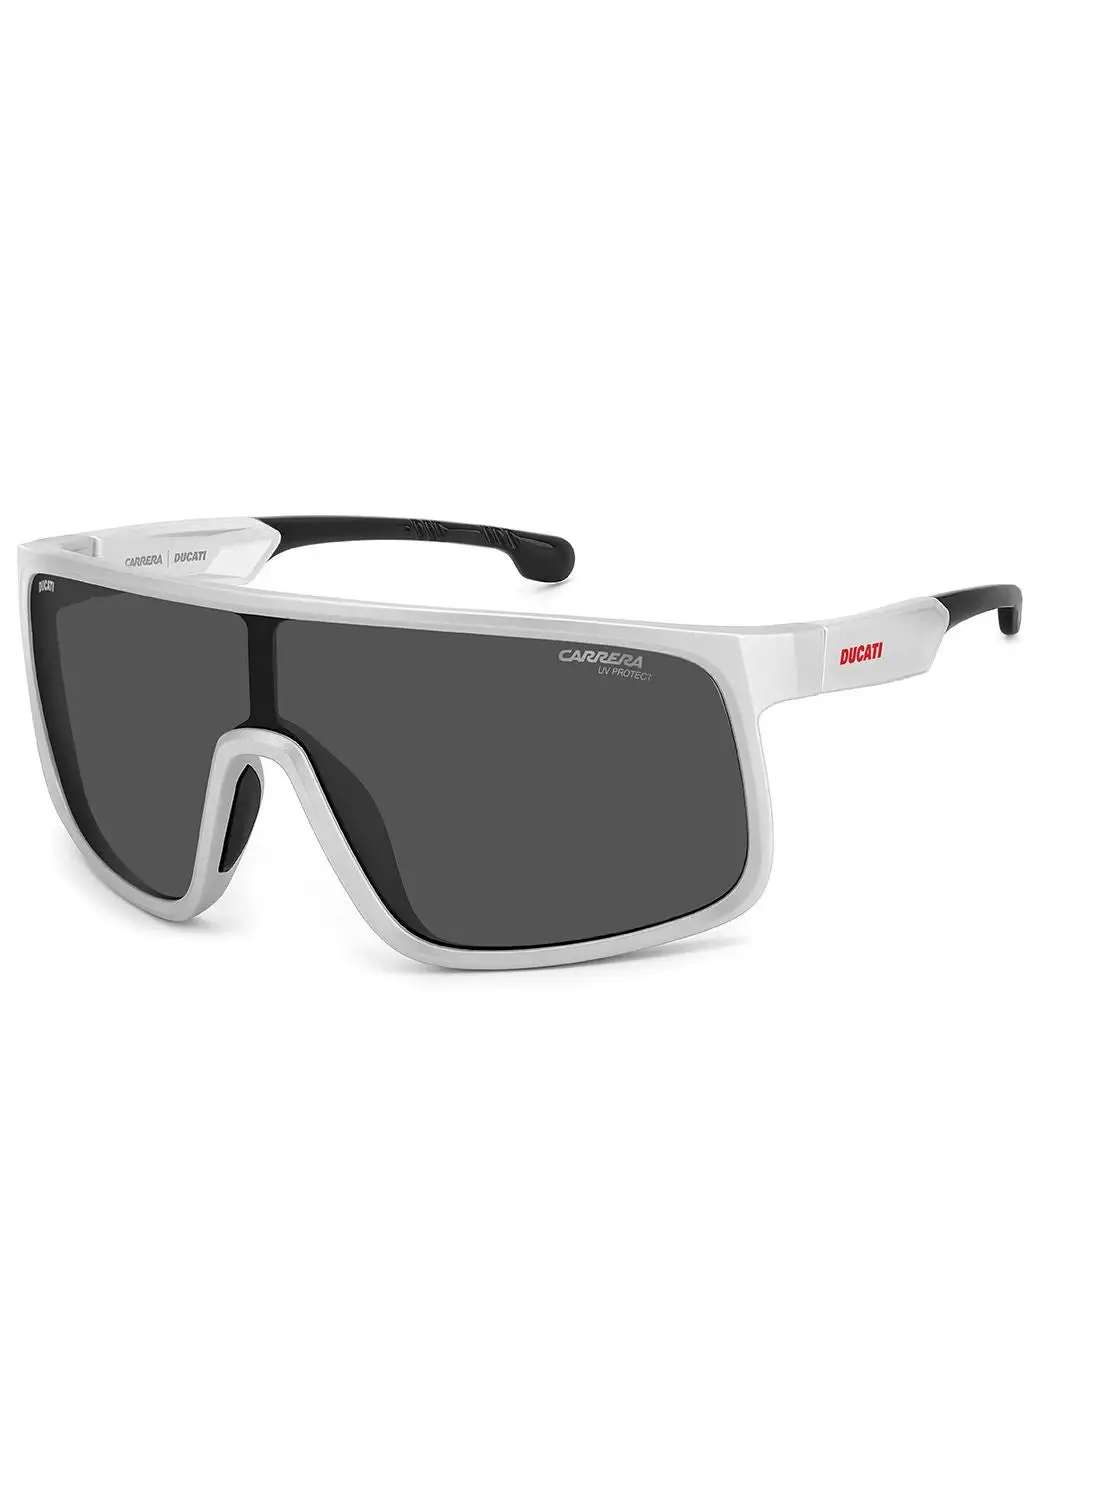 Carrera Men's UV Protection Sunglasses - Carduc 017/S Mattwhite 99 - Lens Size: 99 Mm